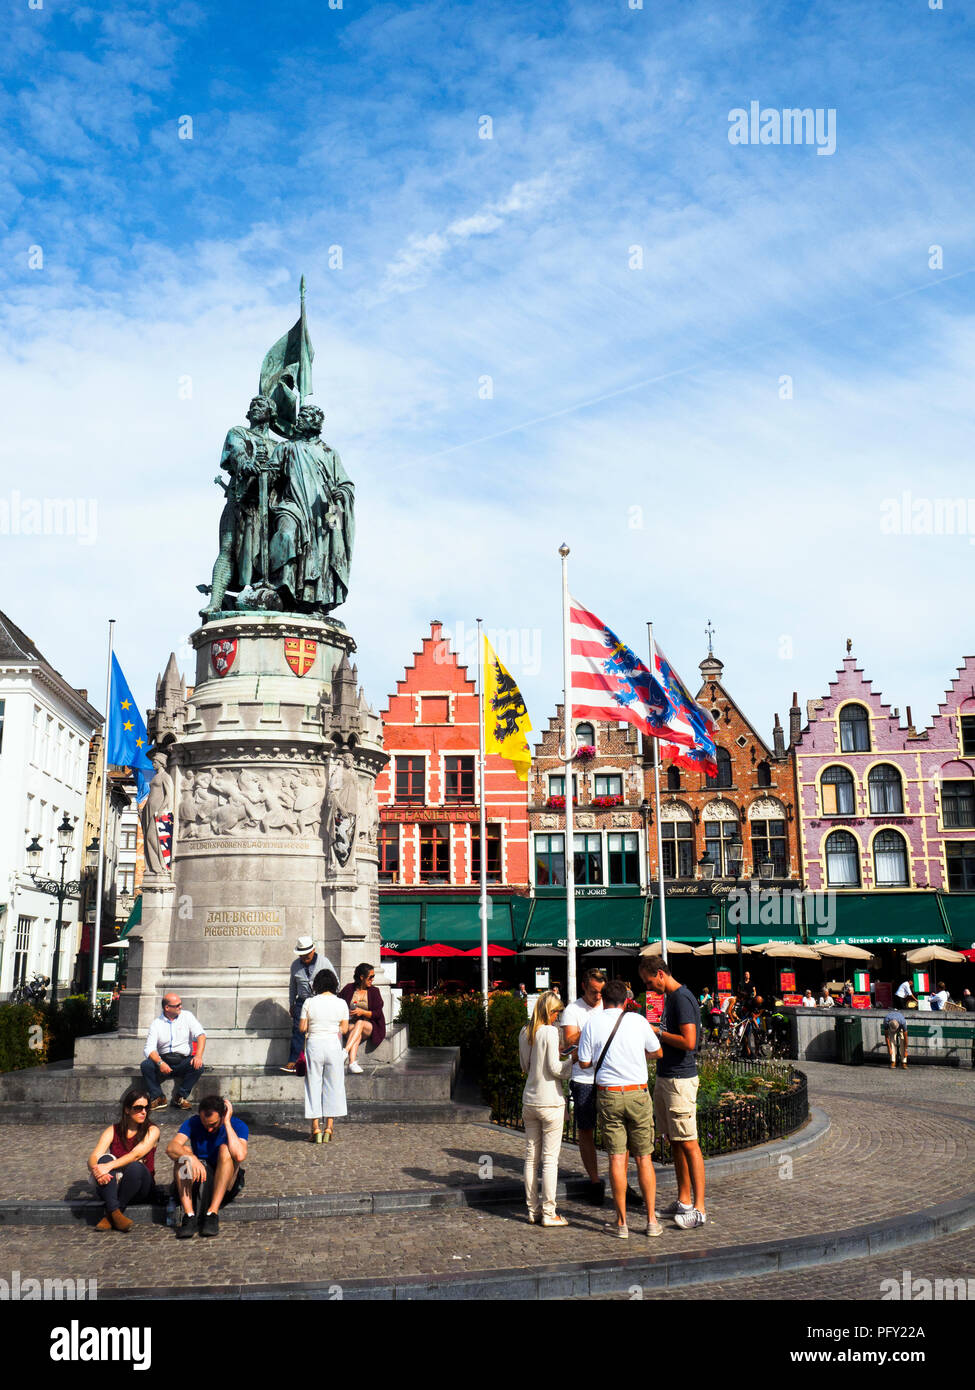 Statue of Jan Breydel and Pieter de Coninck in the market square - Bruges, Belgium Stock Photo